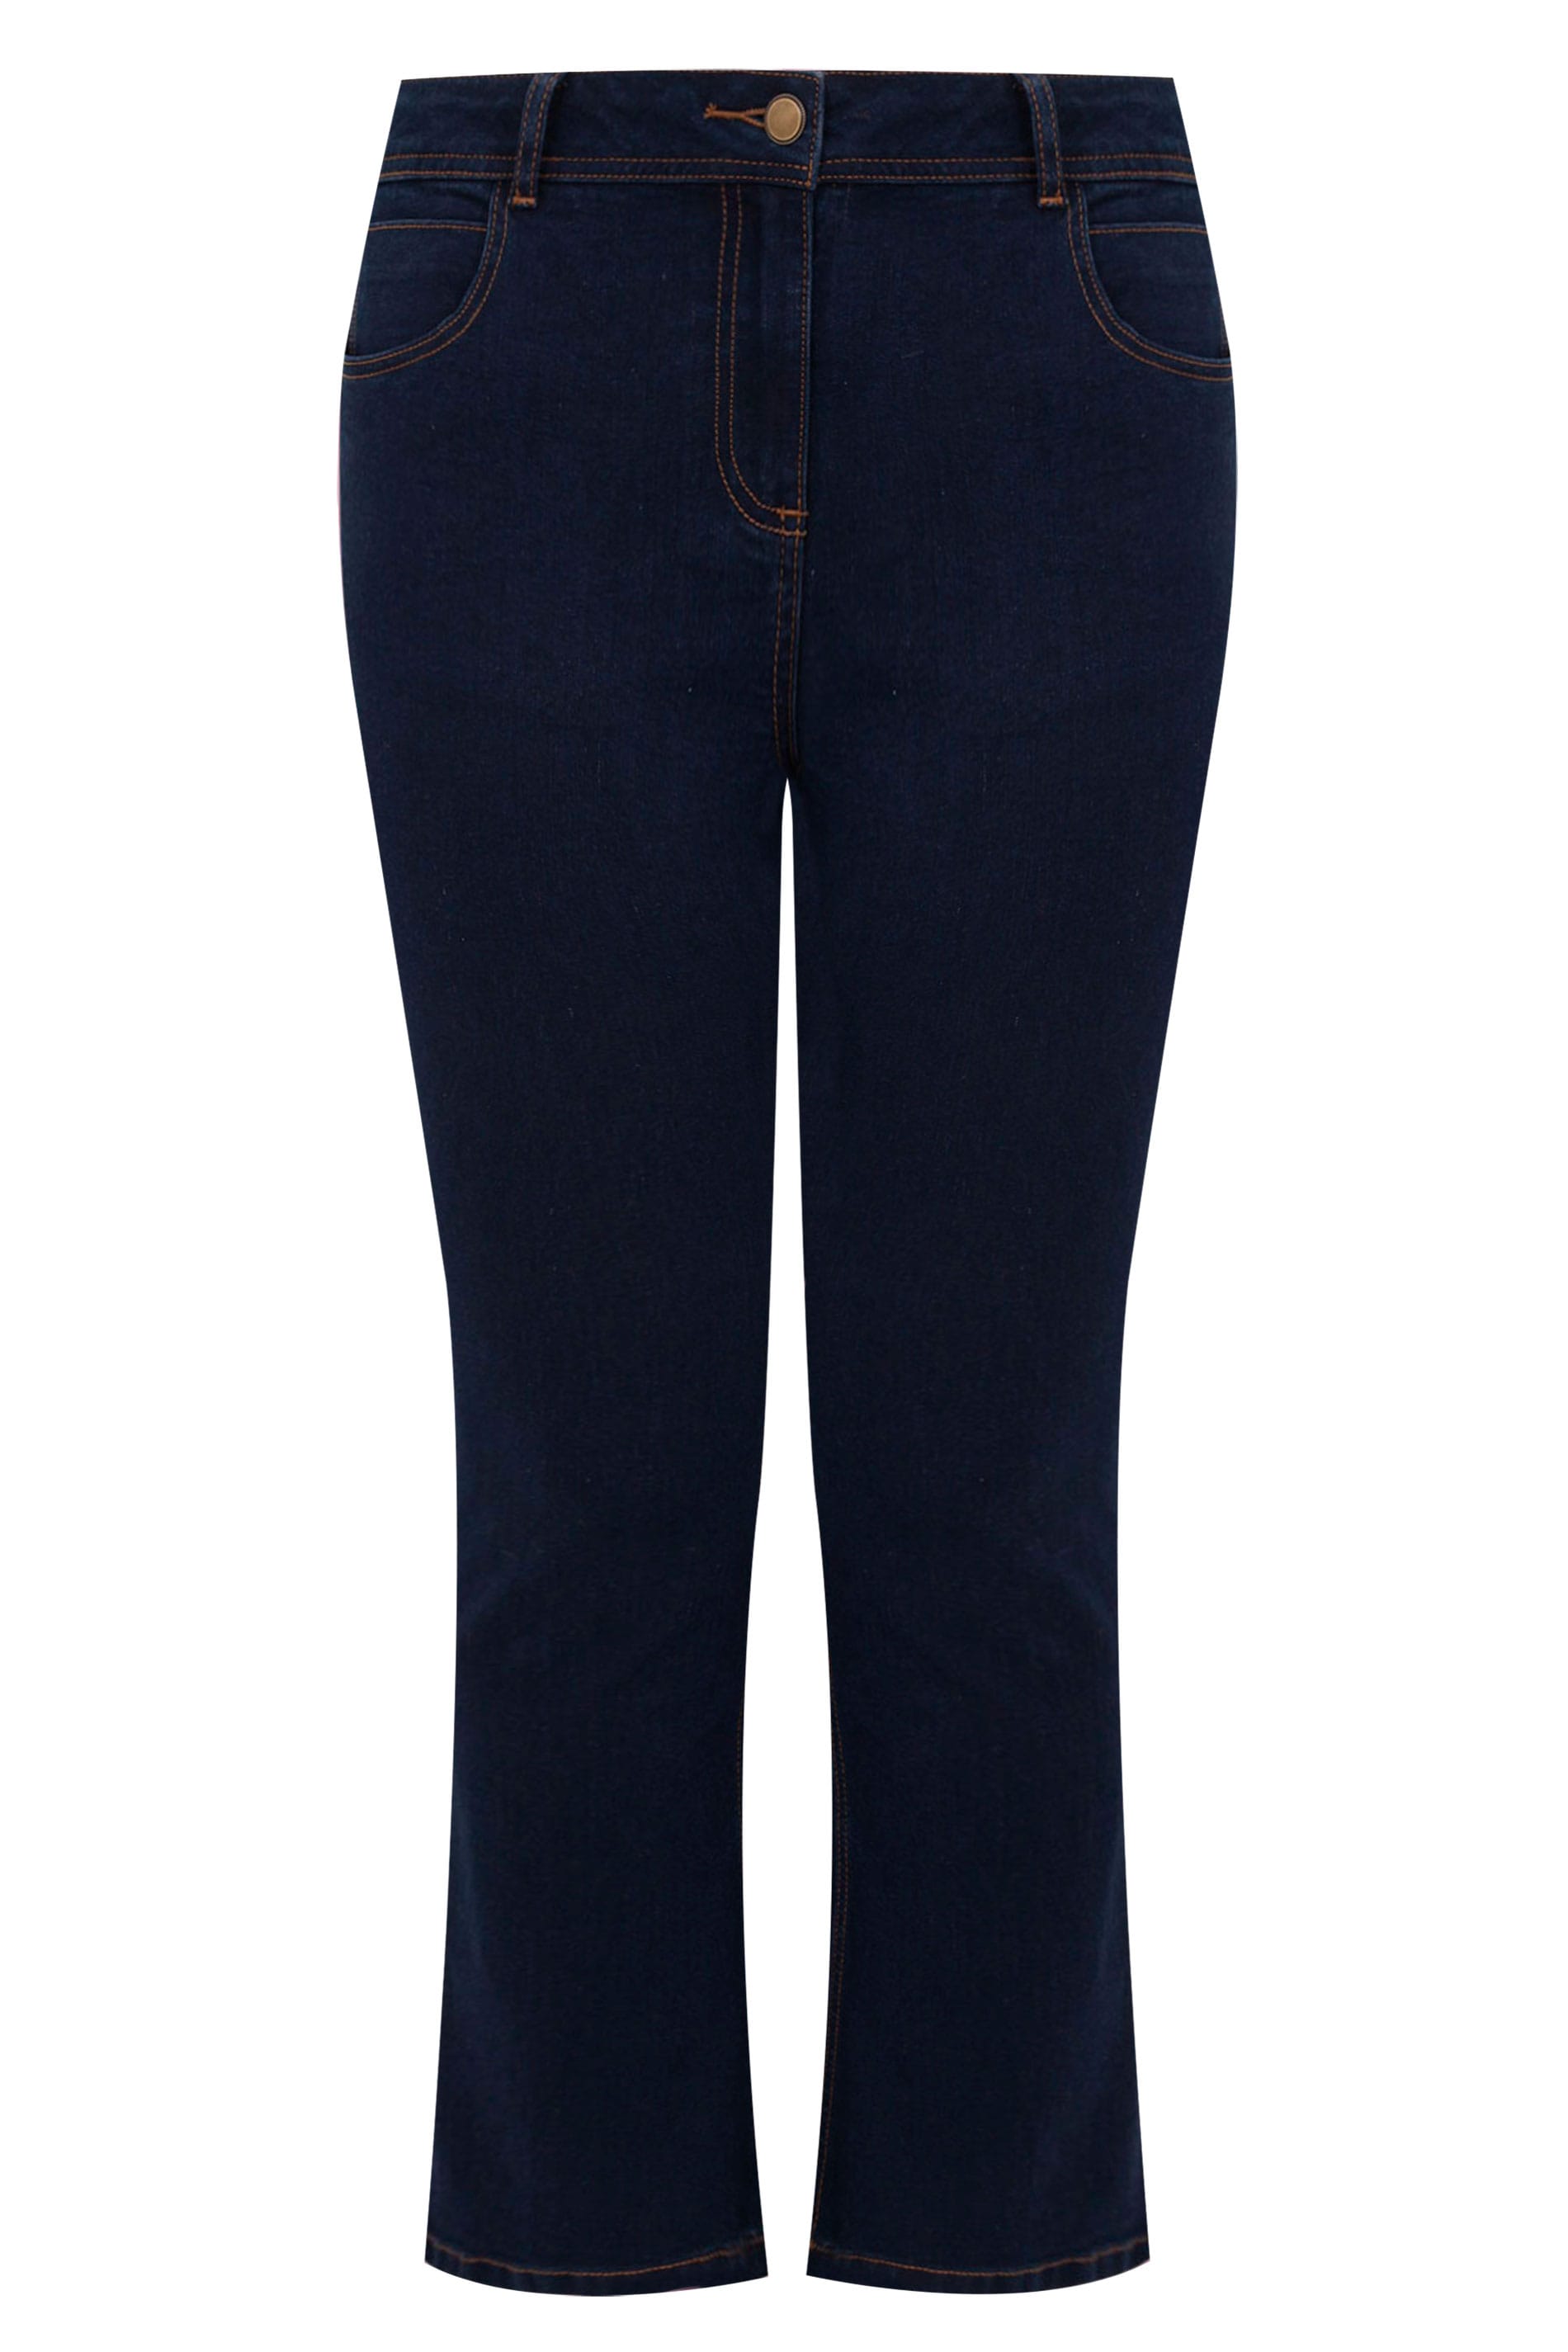 Indigo Bootcut 5 Pocket Denim Jeans Plus Size 16 to 32 